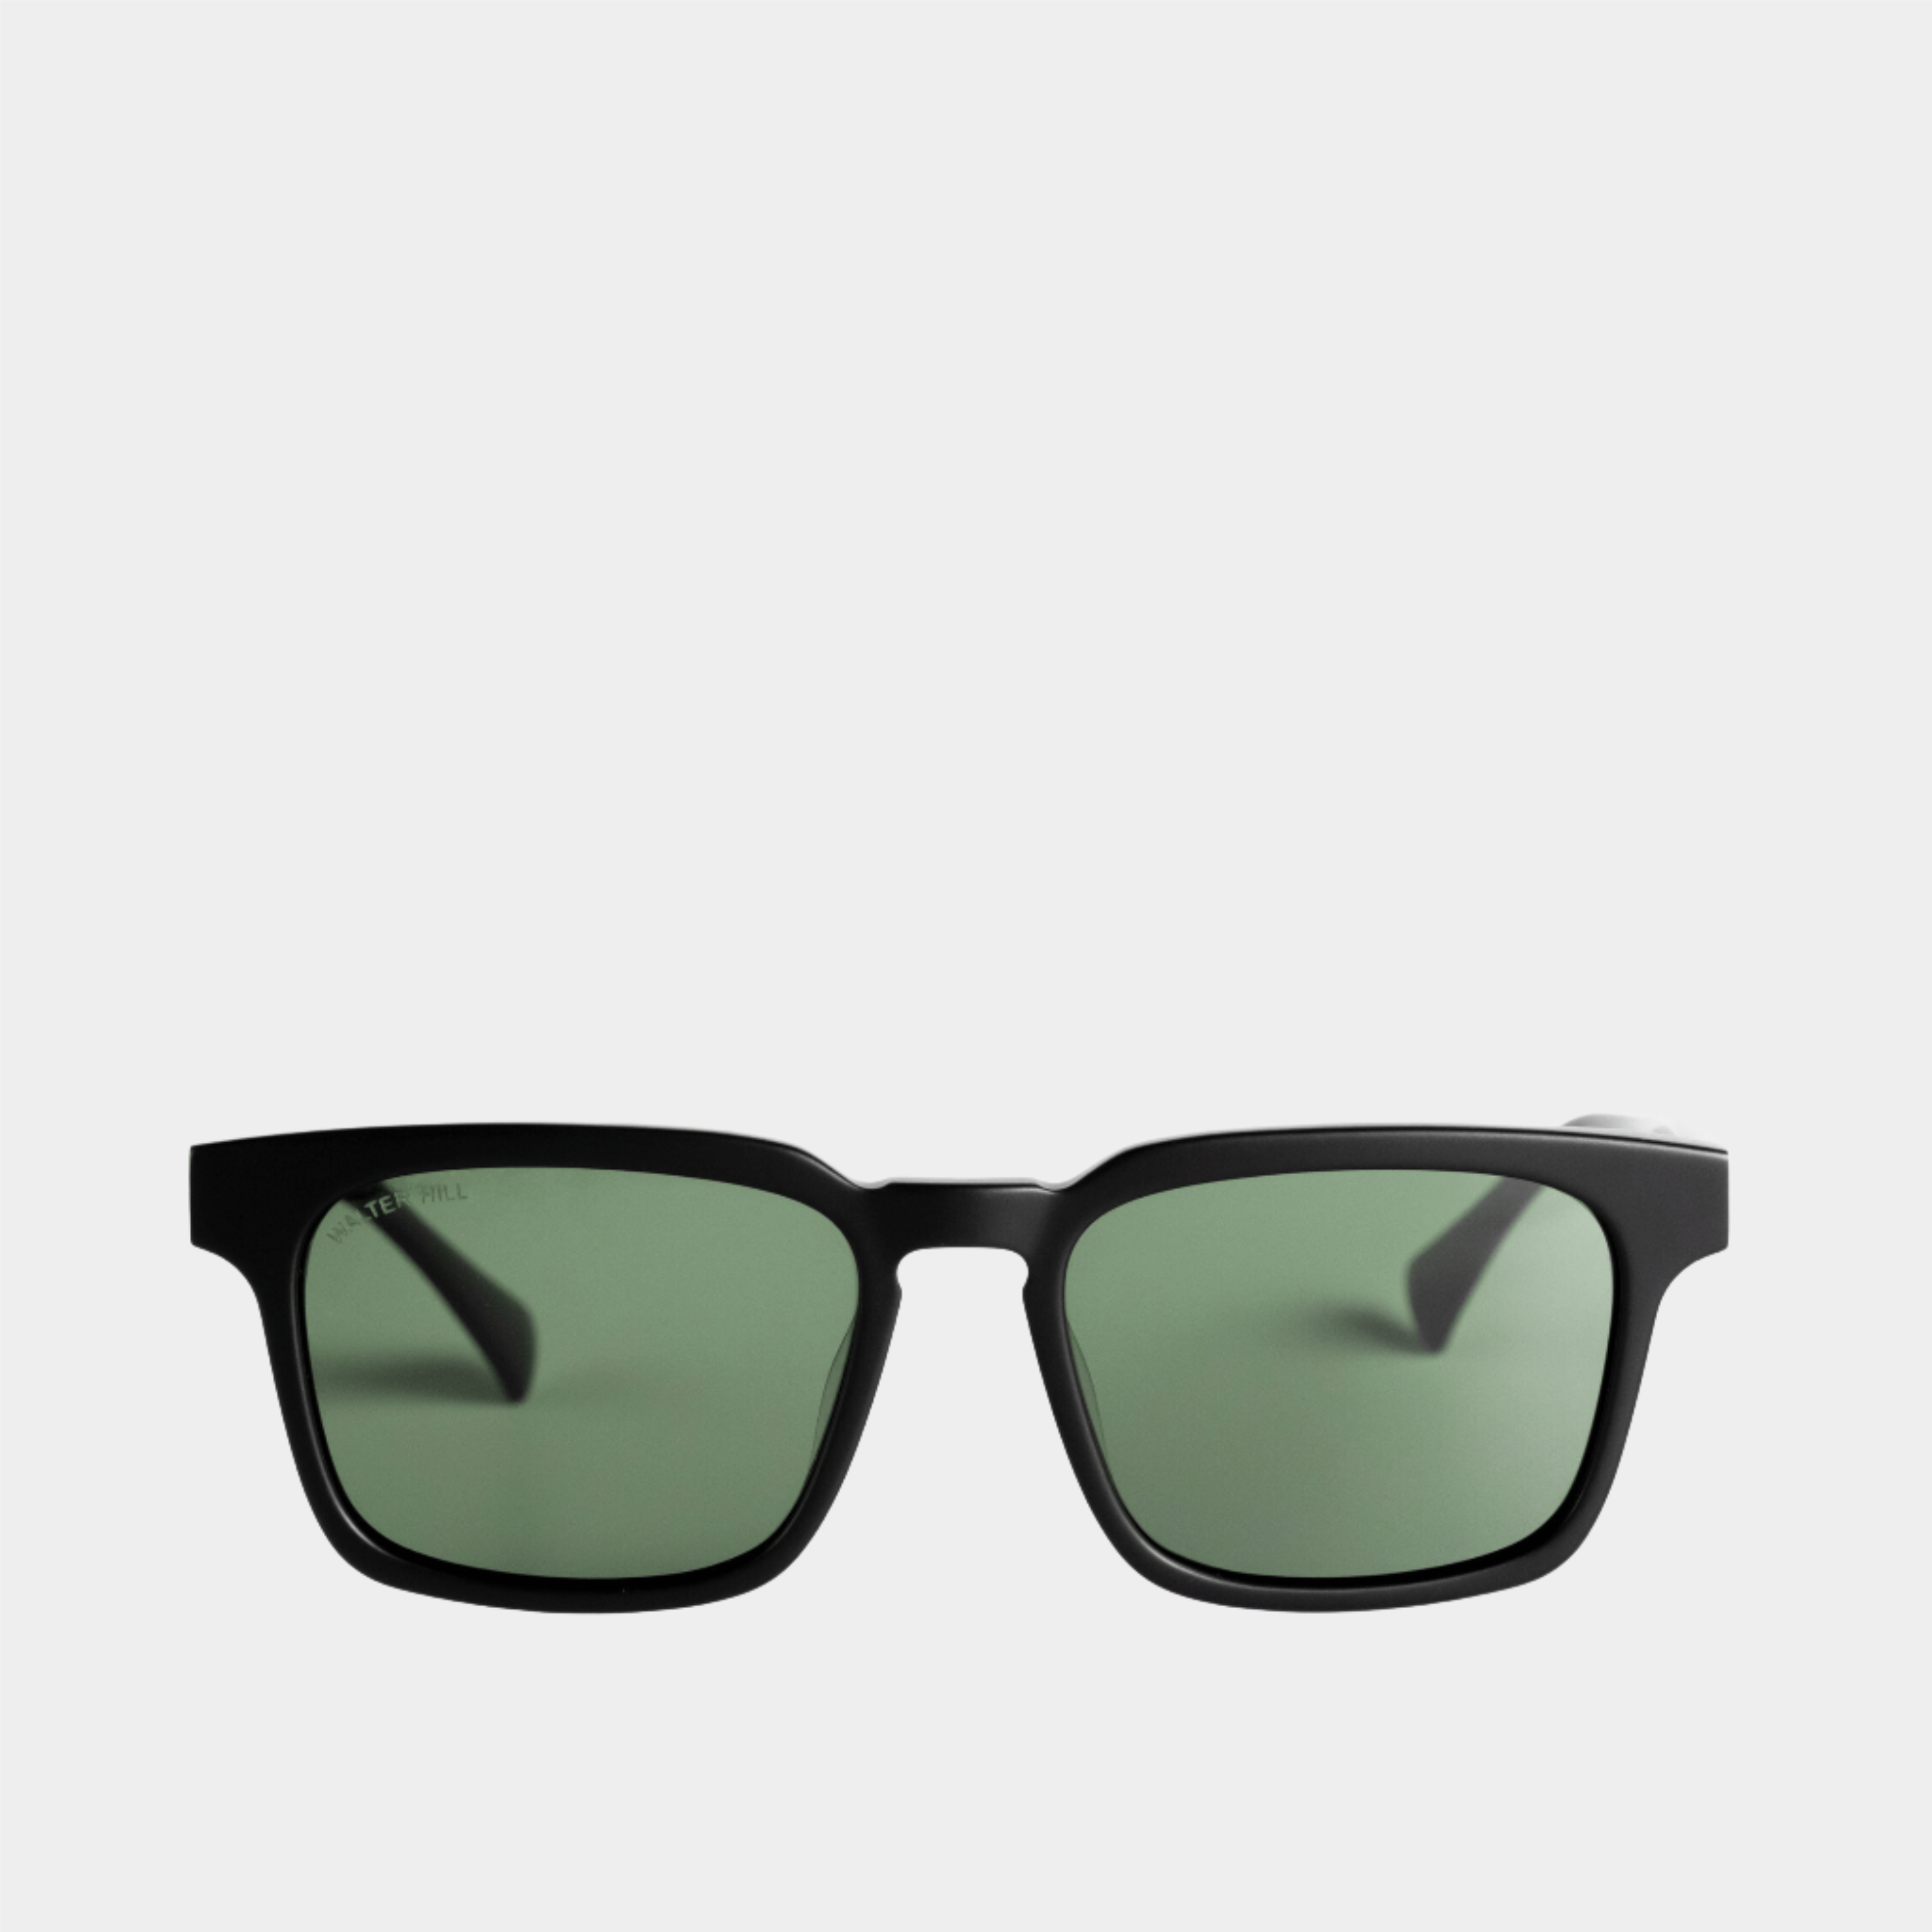 Walter Hill Sunglasses Standard / Polarized Cat.3 / Mazzucchelli Acetate BENNY - Matte Black